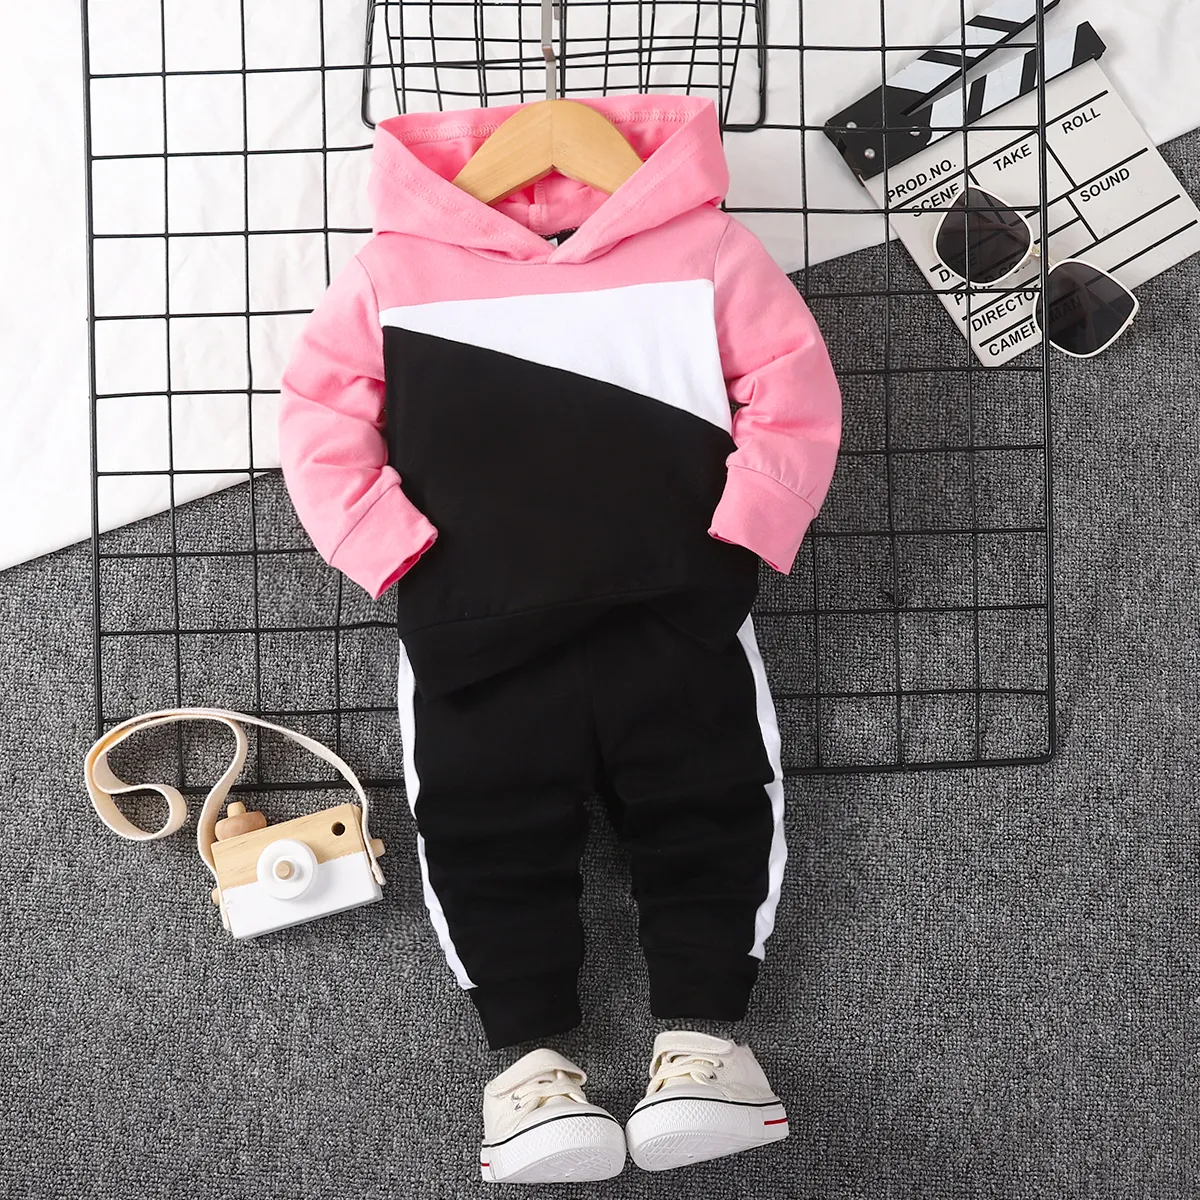 2pcs Baby Boy/Girl 95% Cotton Long-sleeve Colorblock Hoodie and Sweatpants Set Pink big image 1